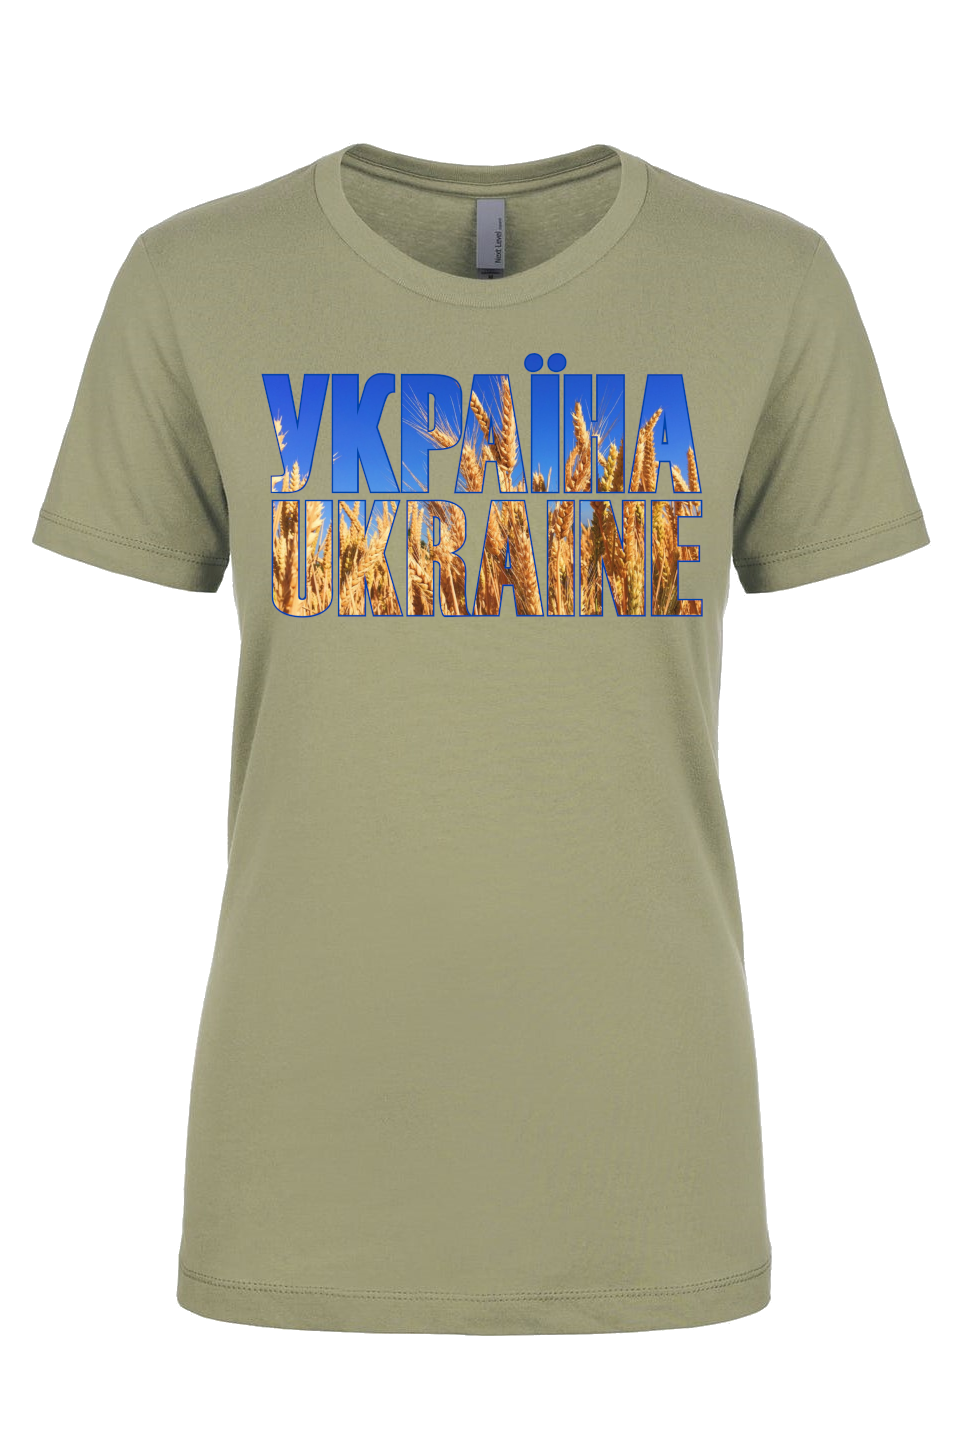 Female fit t-shirt "УКРАЇНА UKRAINE"